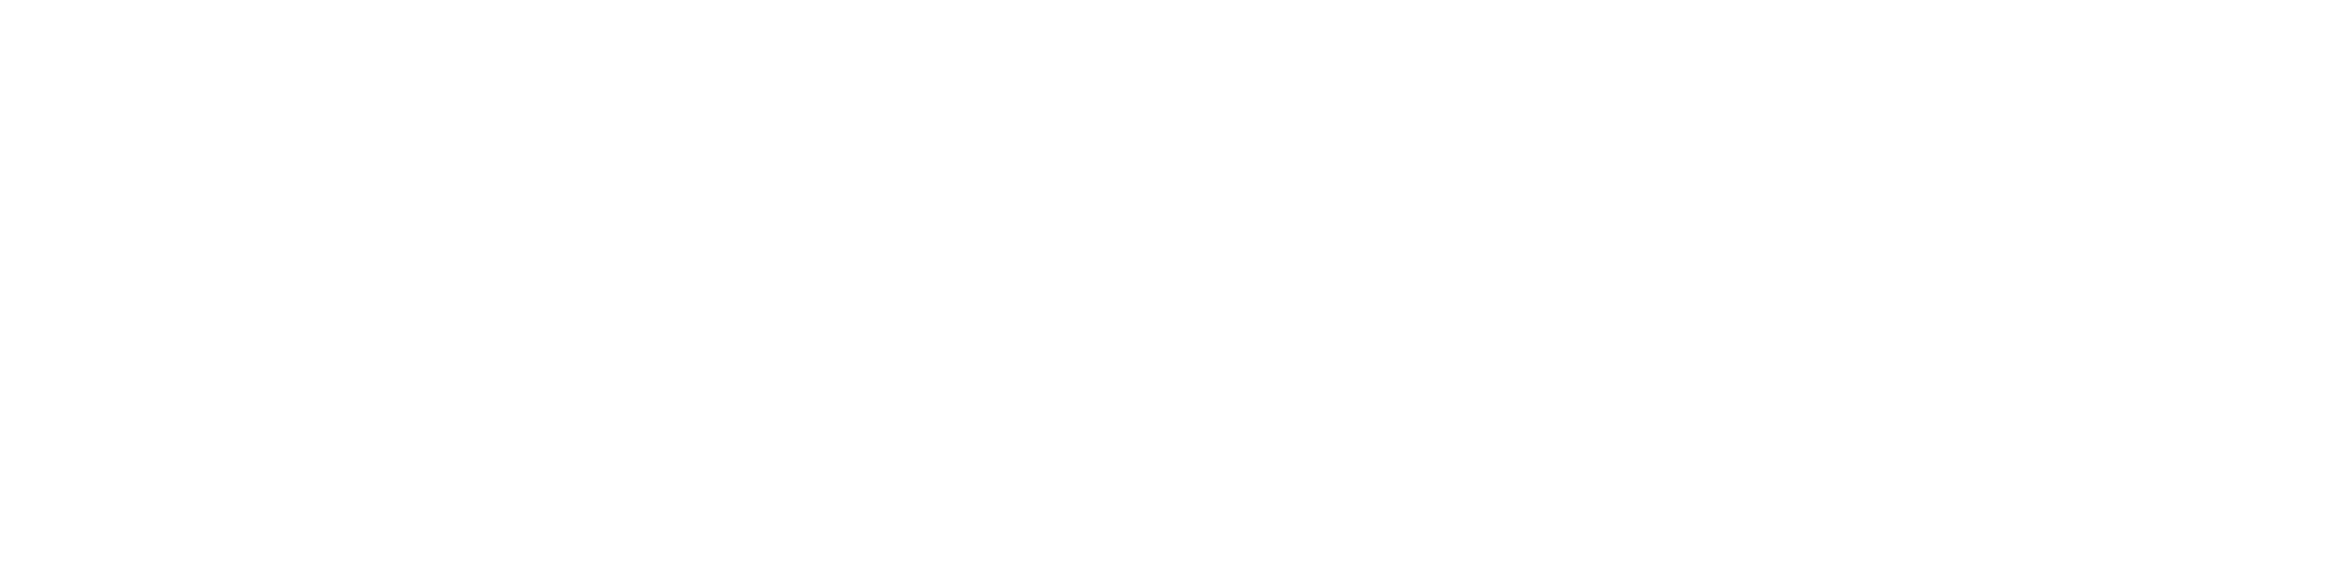 LABEL5 Logo